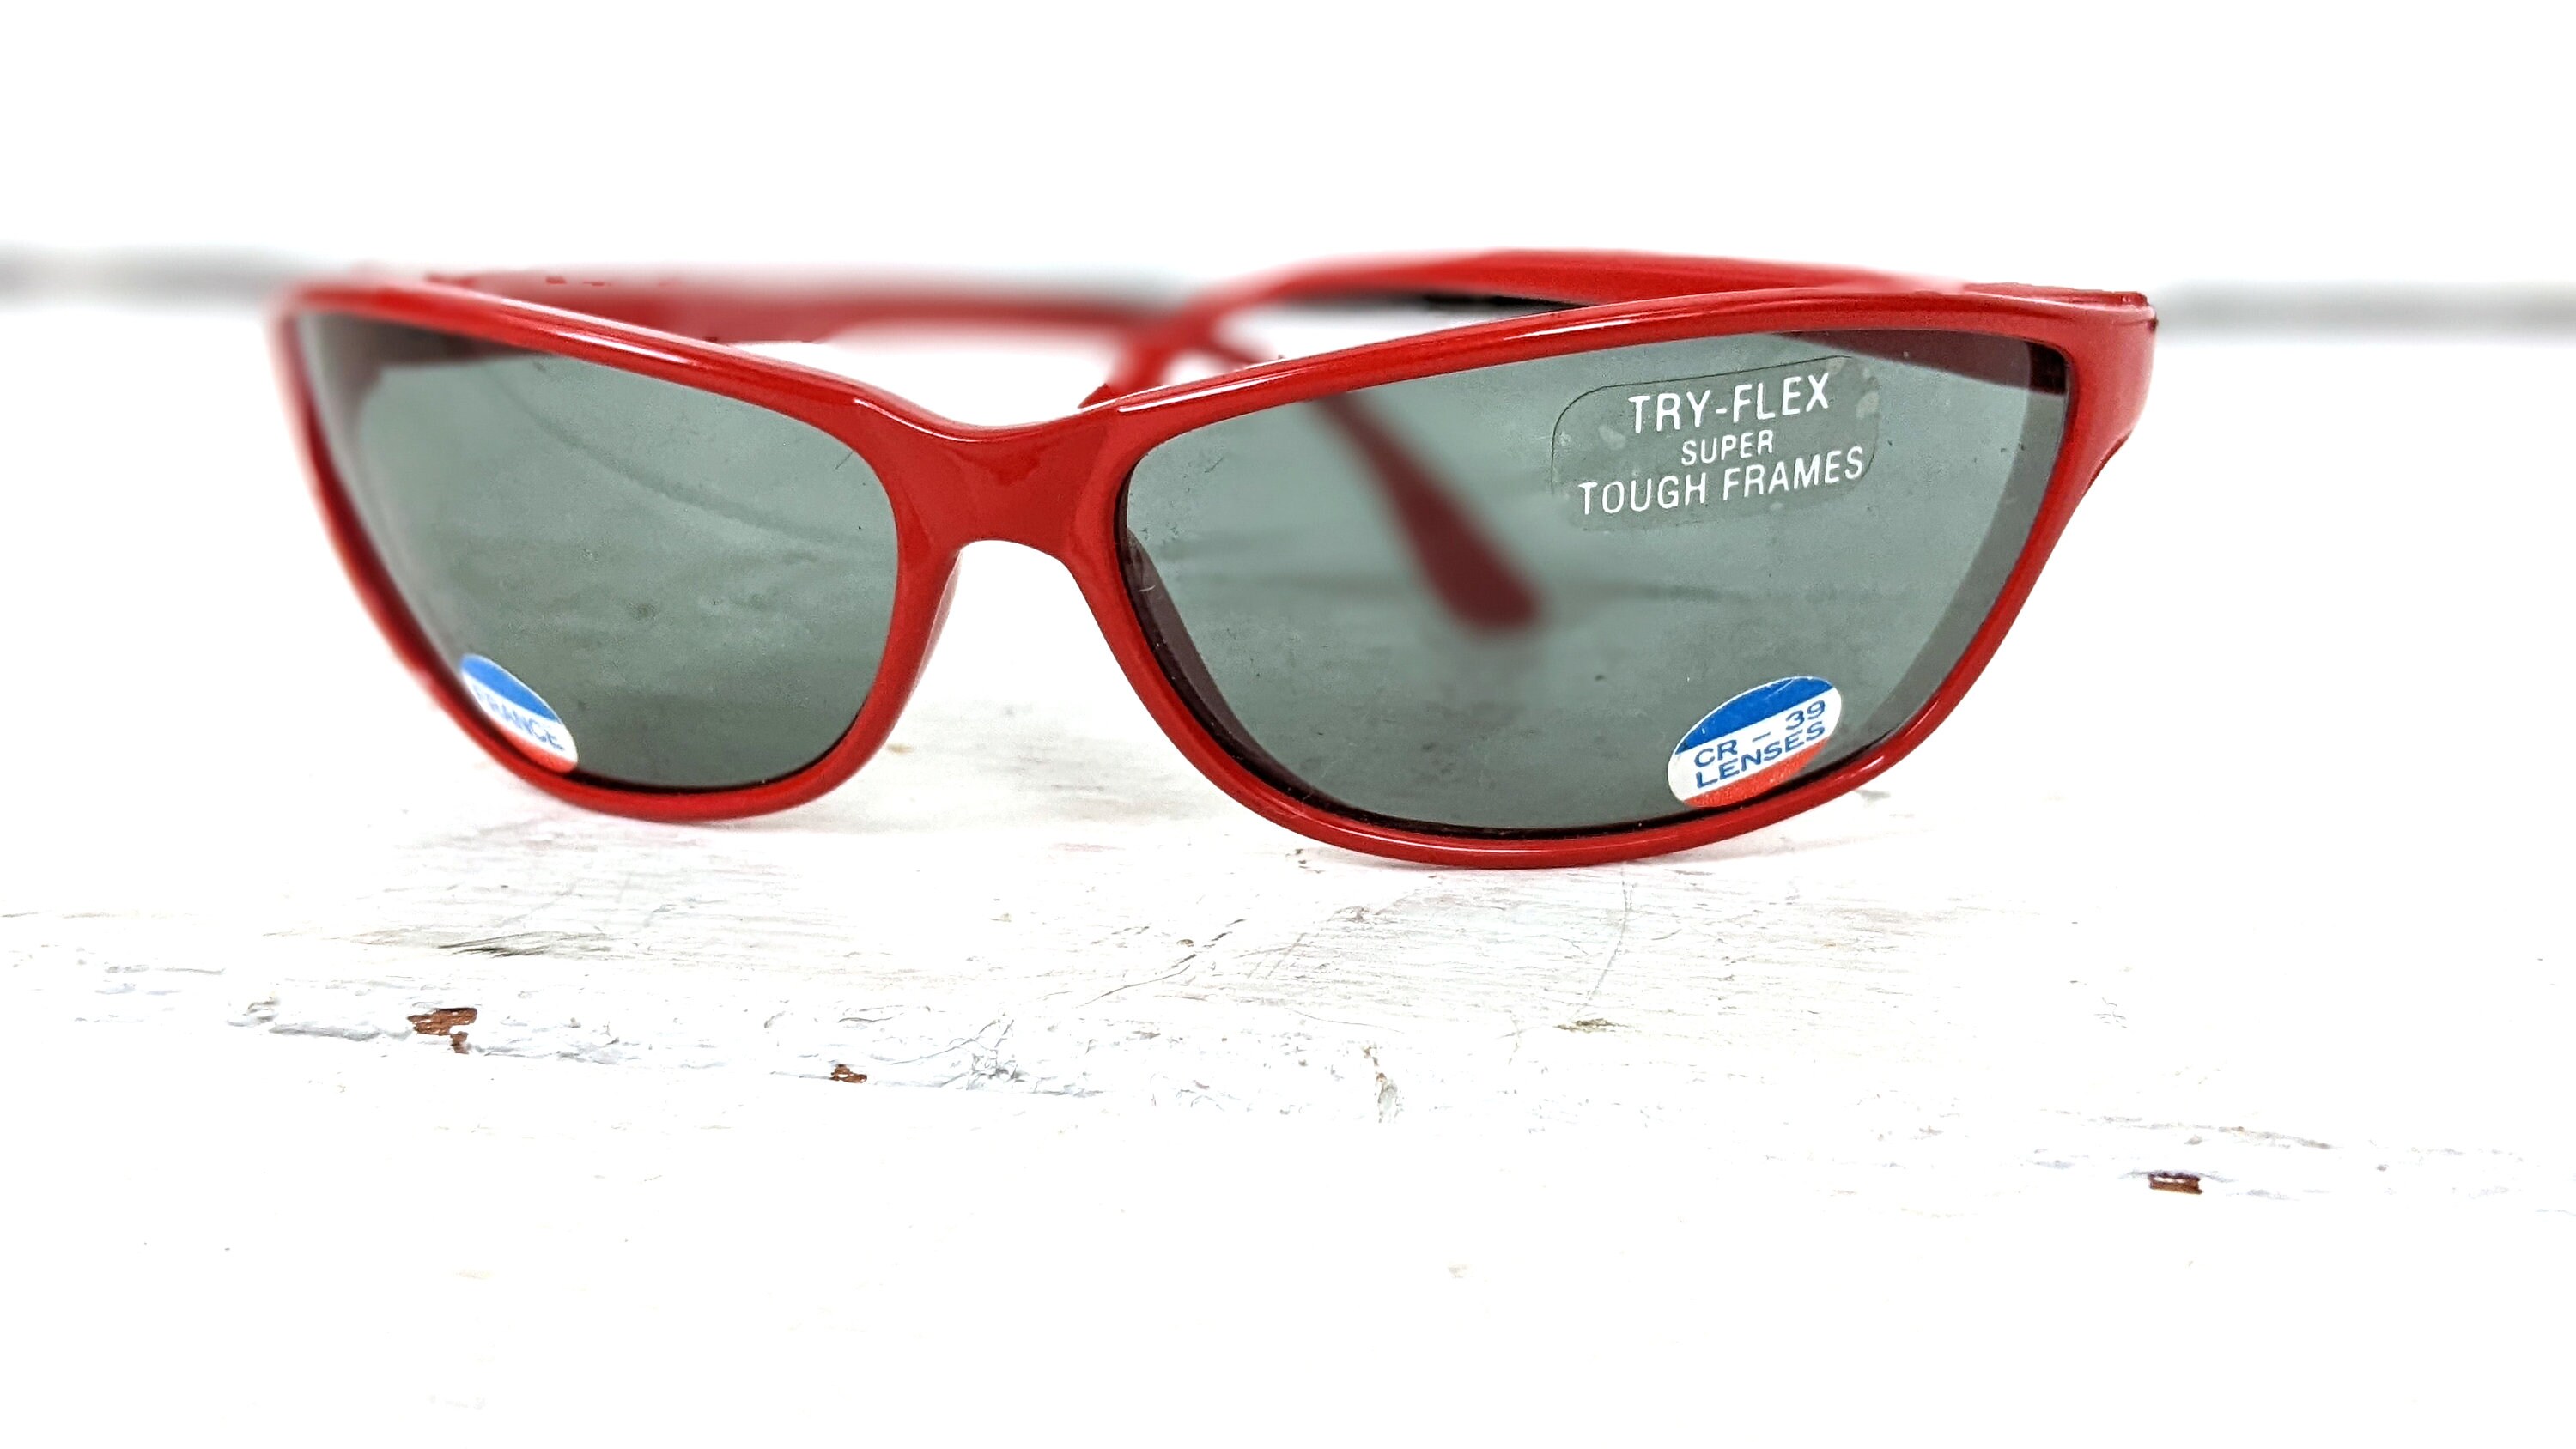 Frames Etsy Tough Sunglasses Vintage Flex Light 39 Lenses Red Tinted CR Weight - France Super Plastic Try